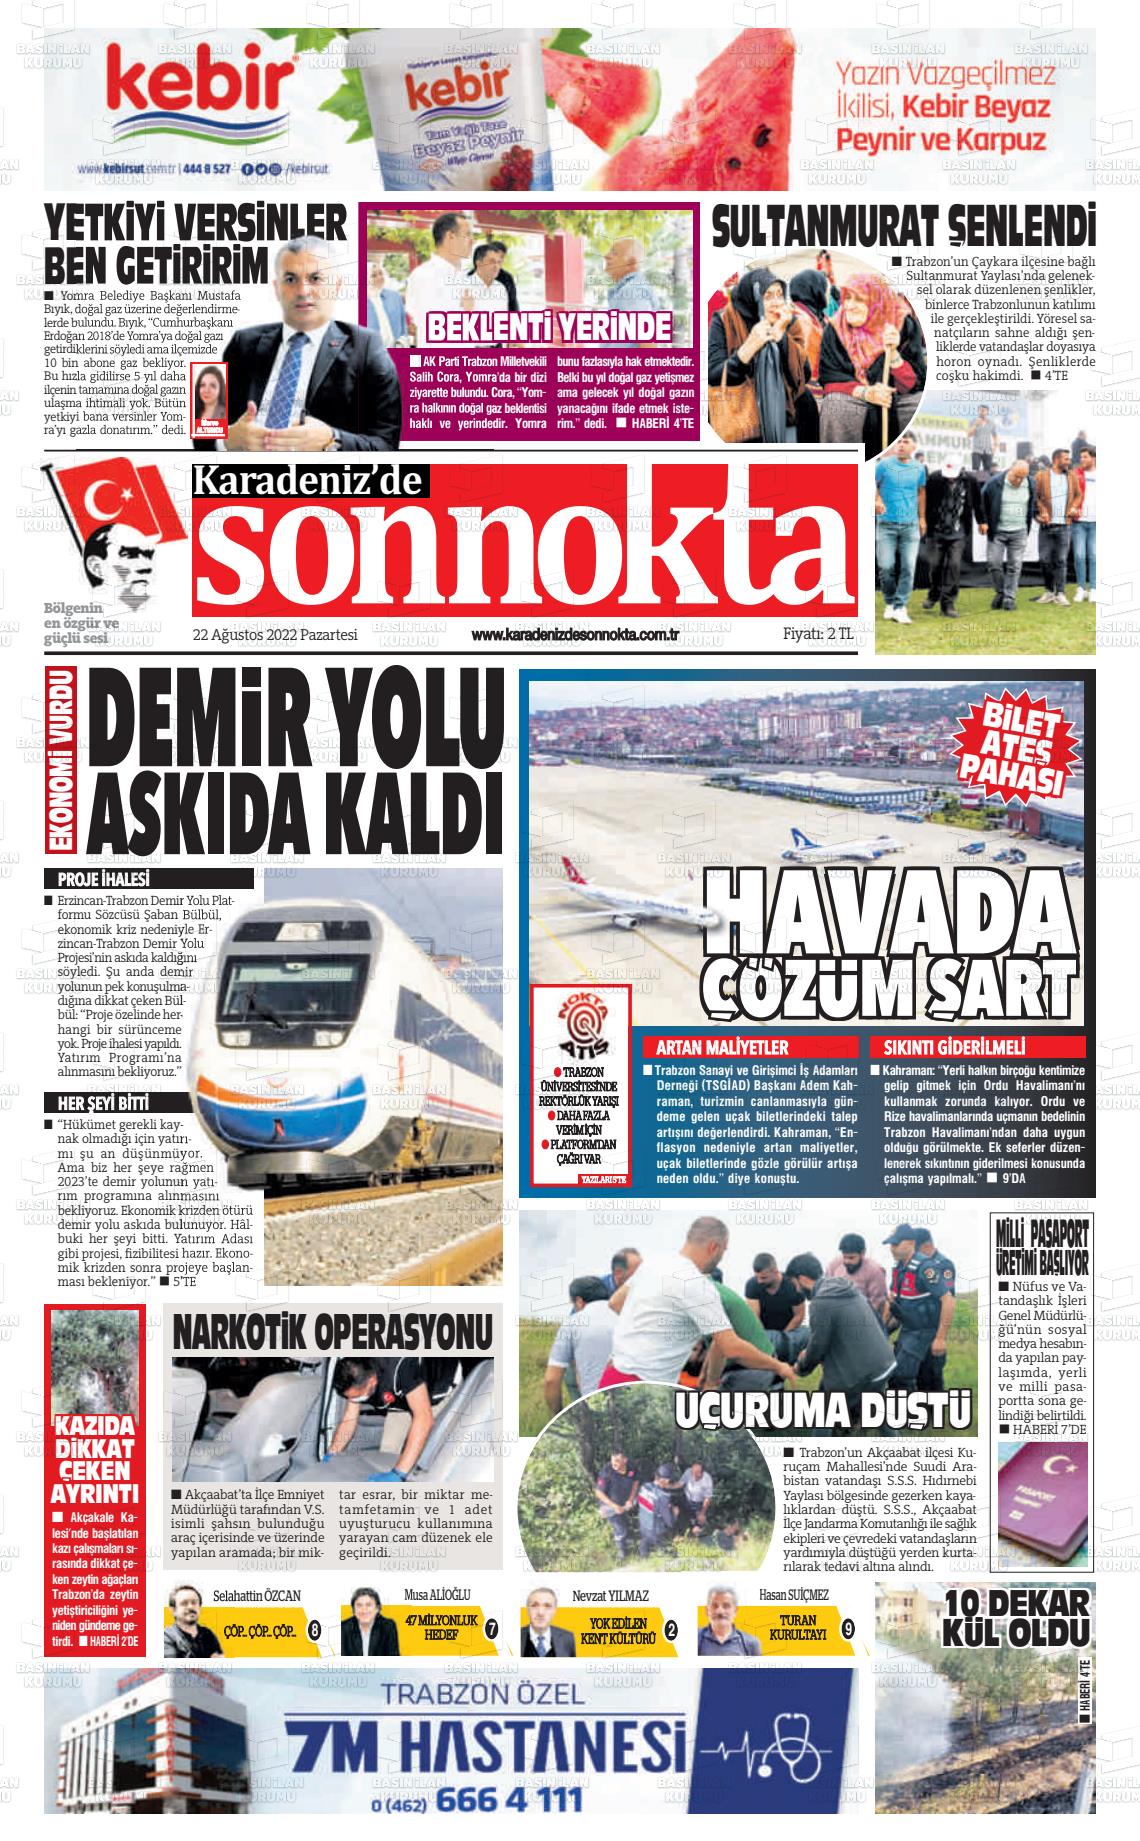 22 Ağustos 2022 Karadeniz'de Sonnokta Gazete Manşeti